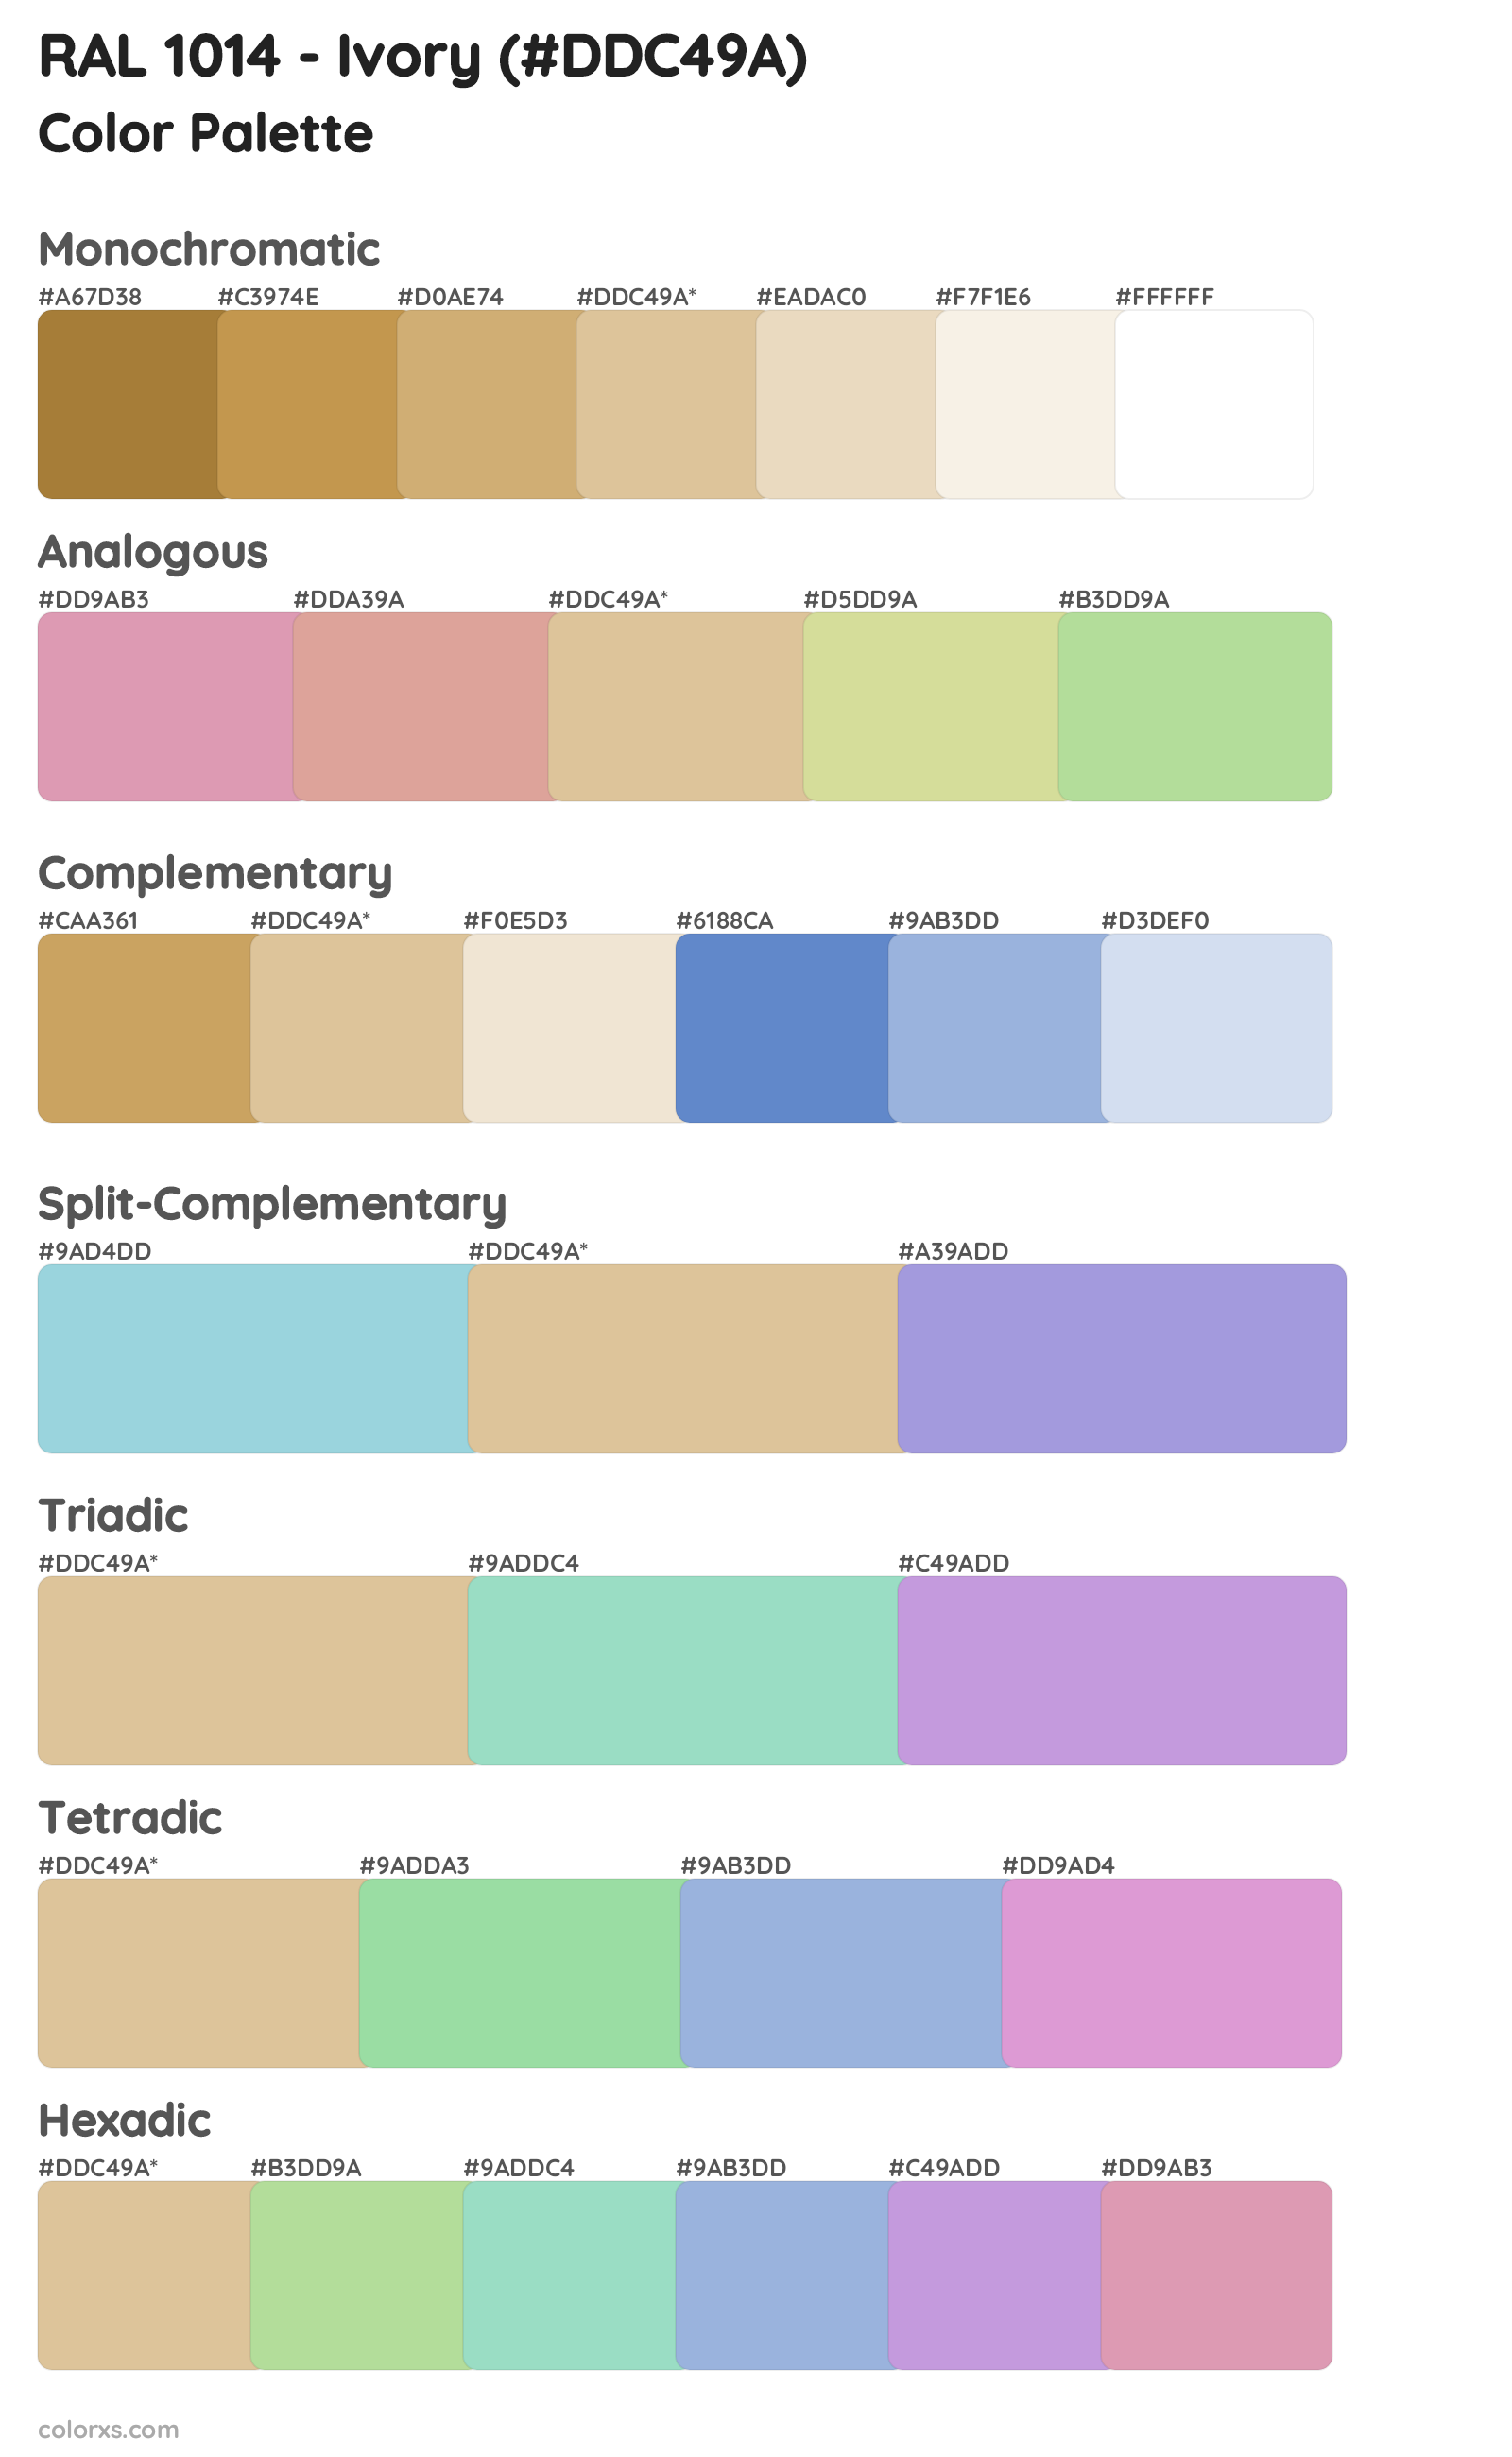 RAL 1014 - Ivory Color Scheme Palettes